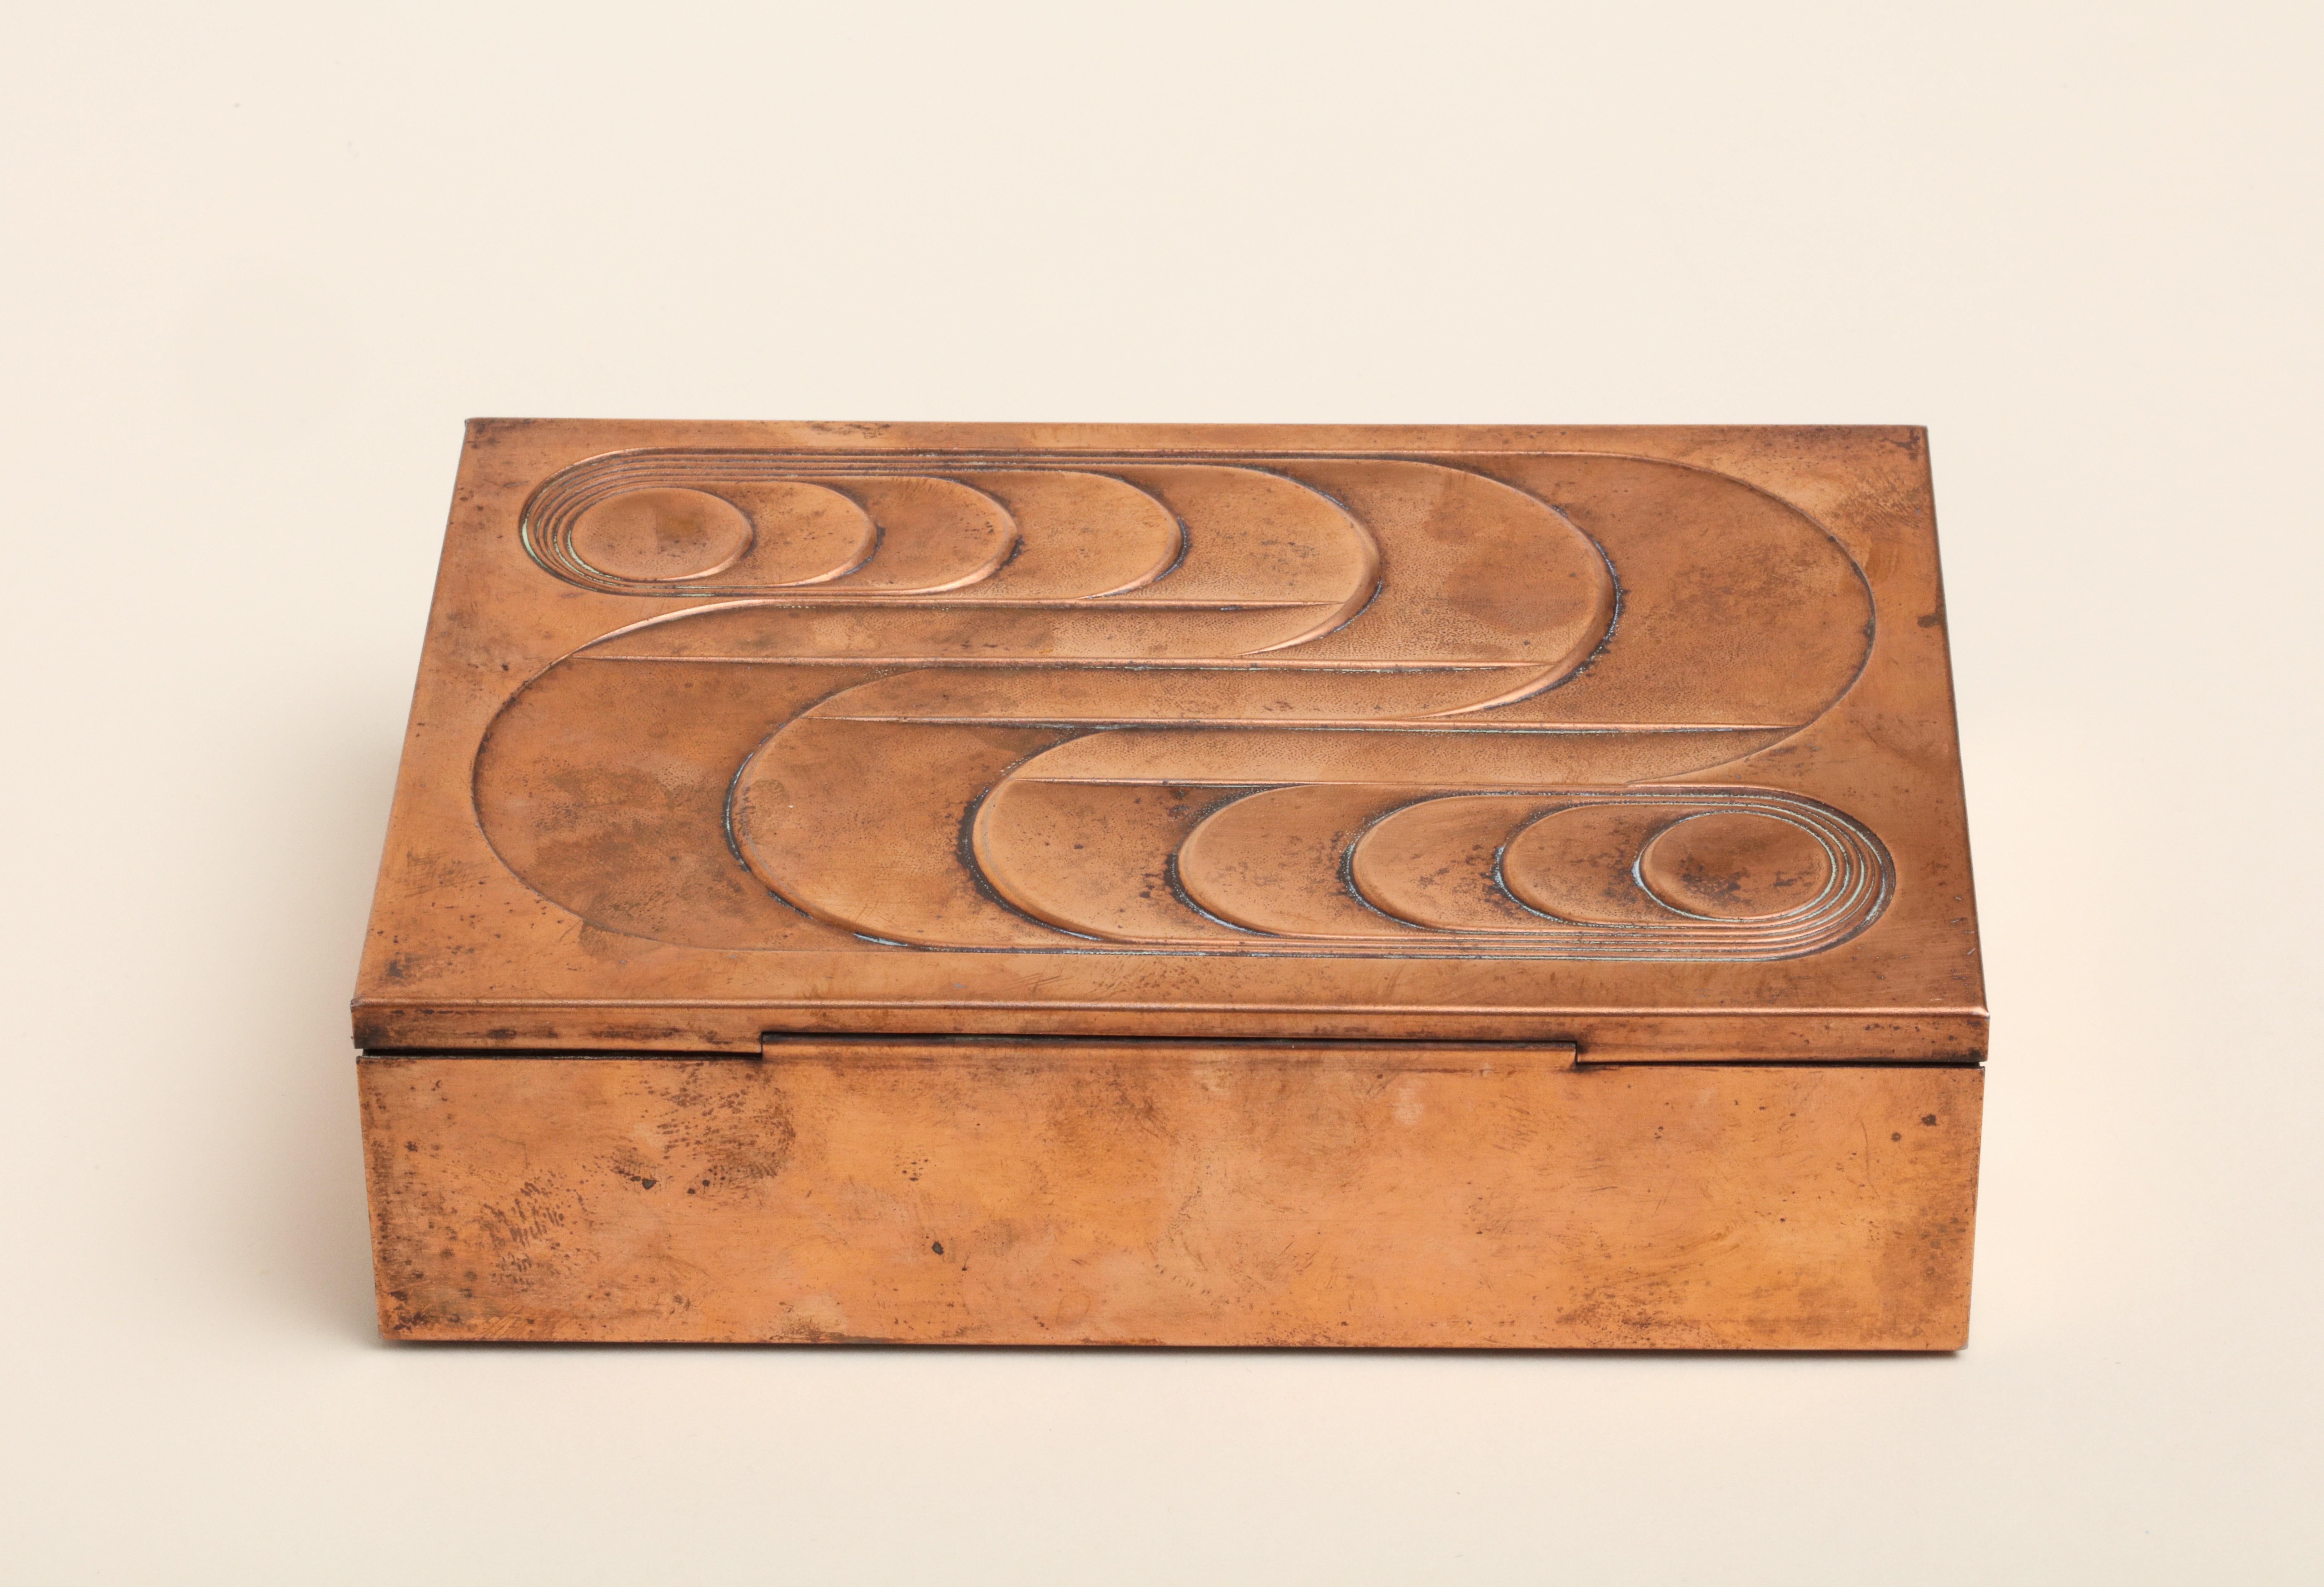 American Art Deco Hinged Copper Box with Geometric Design 1